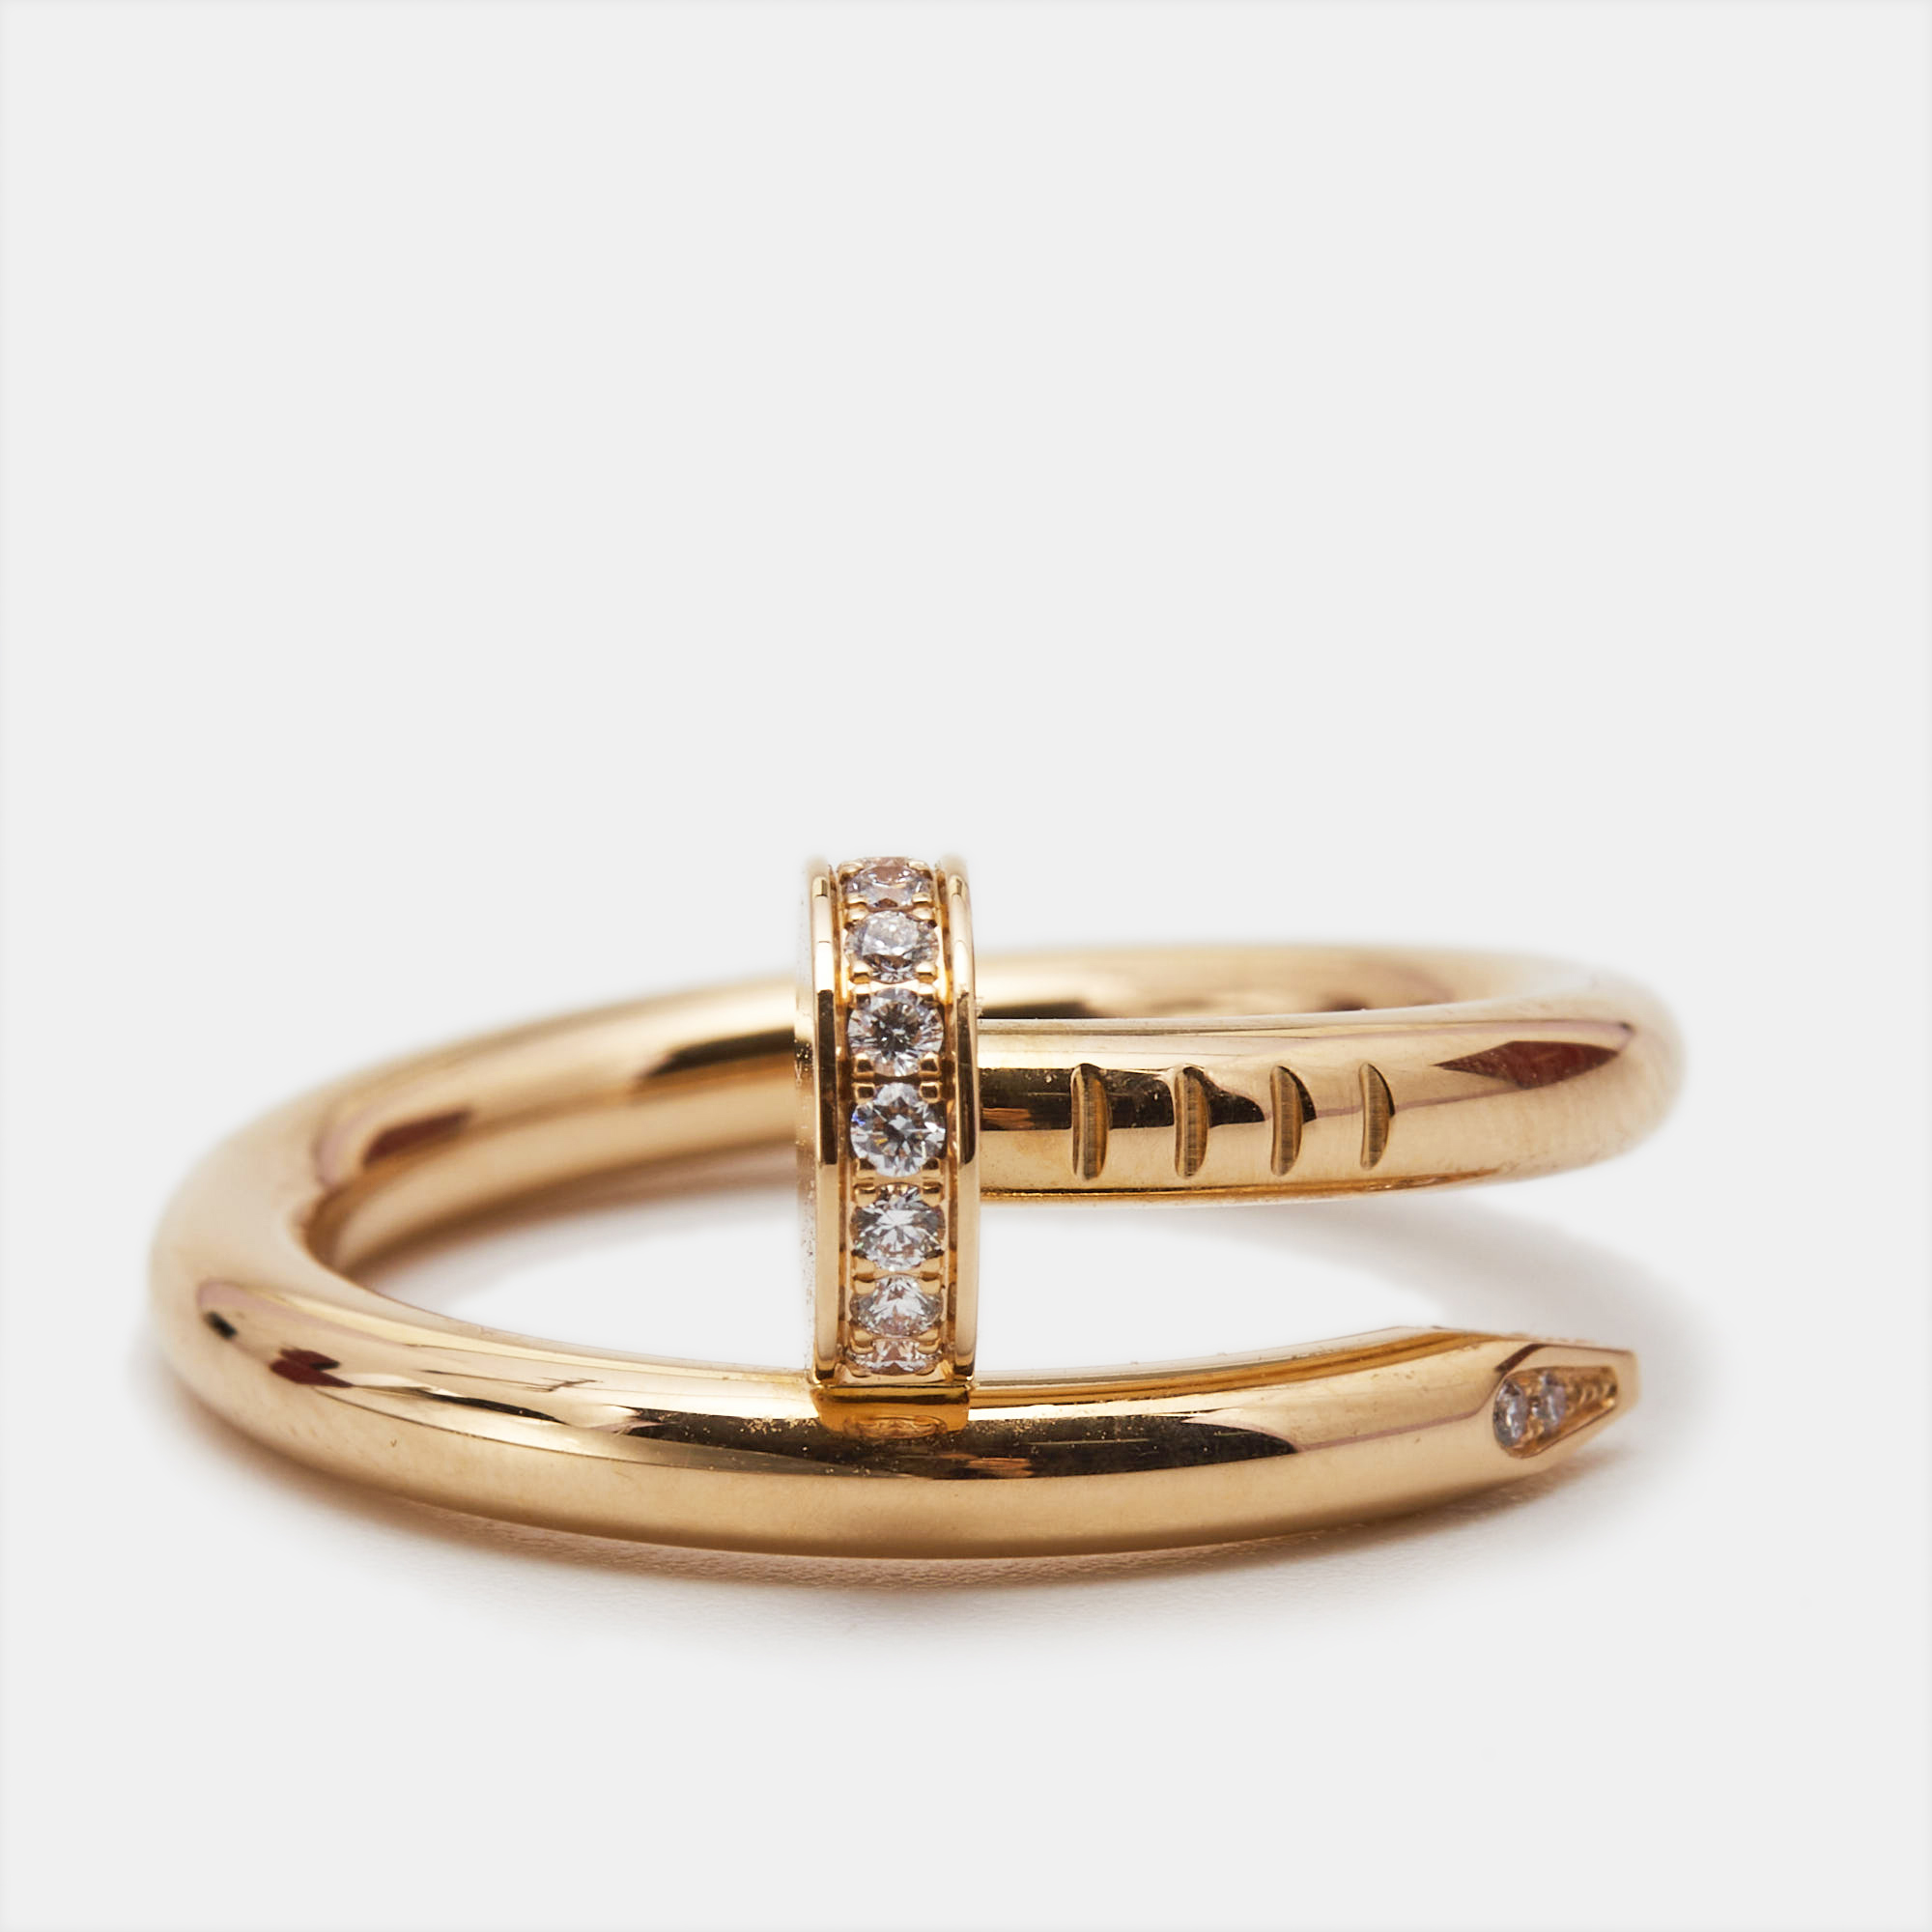  Cartier Juste Un Clou Diamonds 18k Yellow Gold Ring Size 52